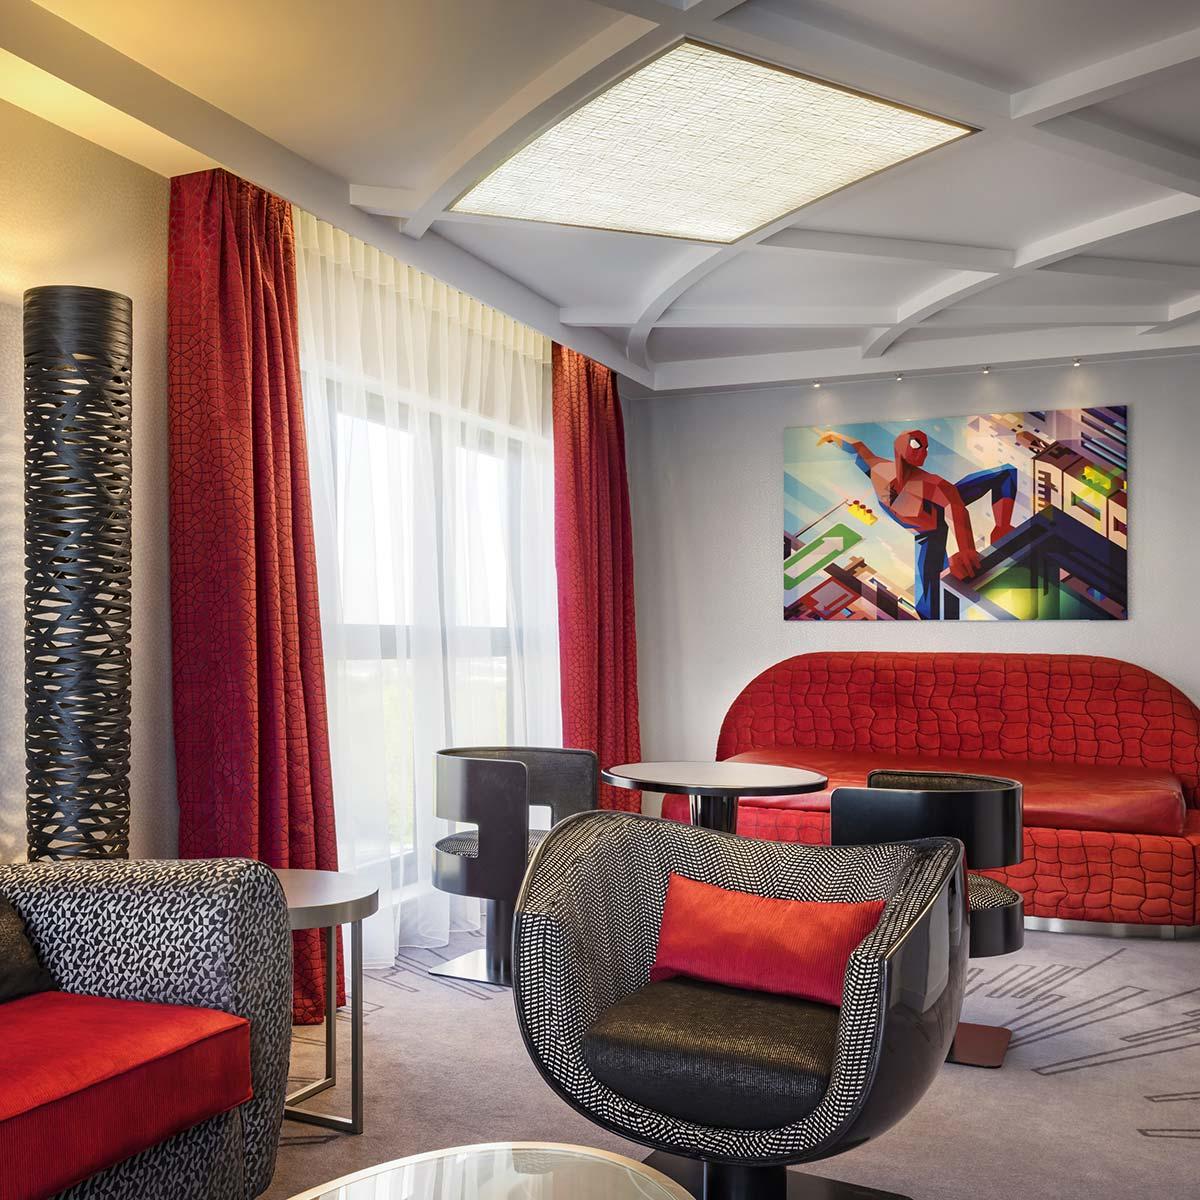 Chambres Empire State Club &amp; Suites et Empire State Club Lounge digne de Tony Stark